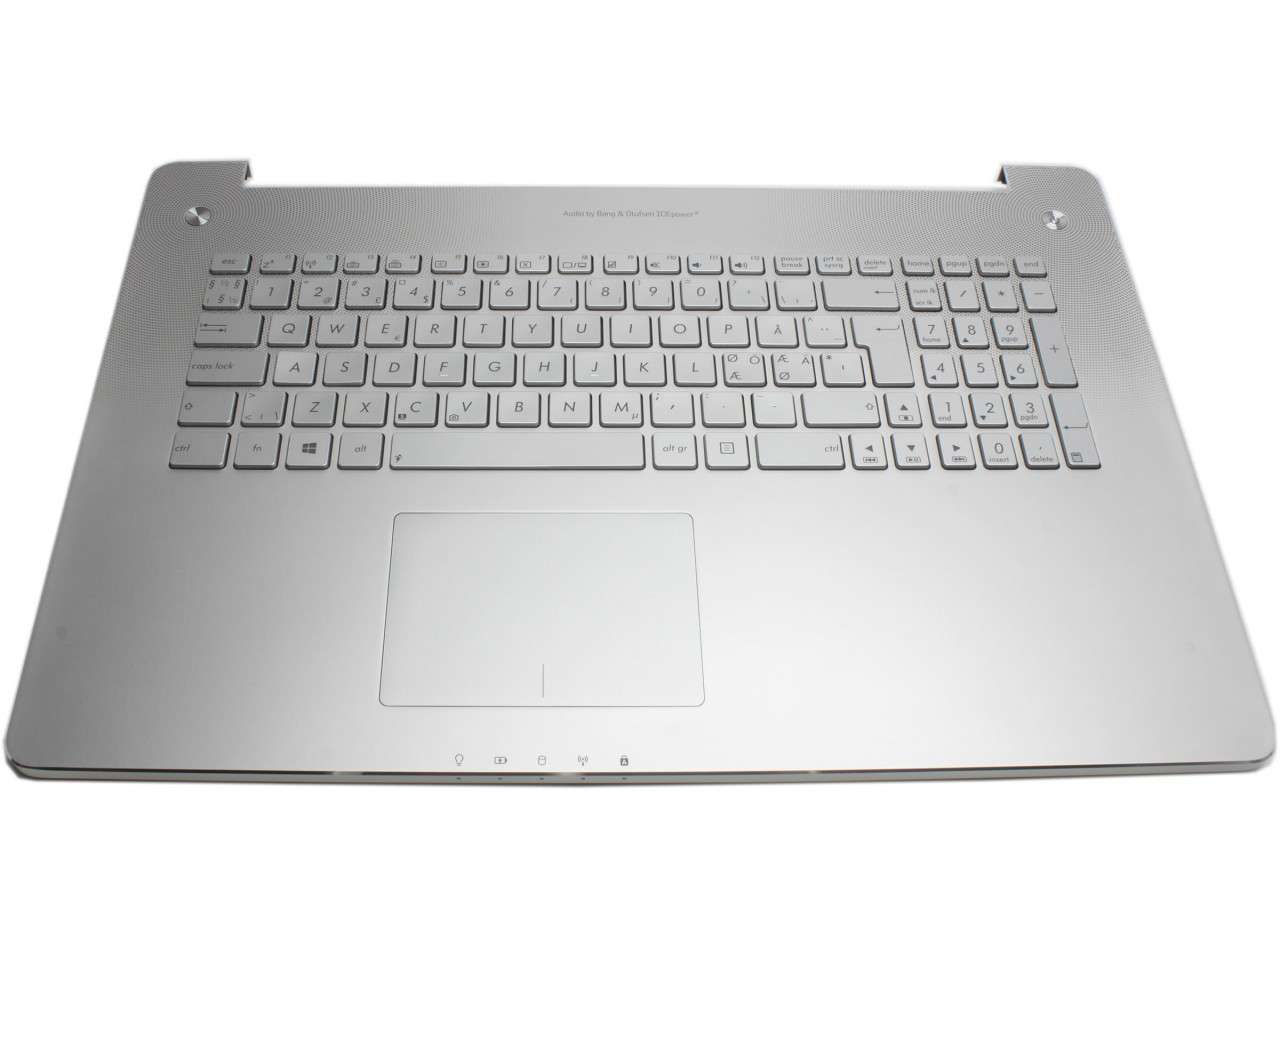 Tastatura Asus N750J argintie cu Palmrest argintiu iluminata backlit argintie imagine Black Friday 2021